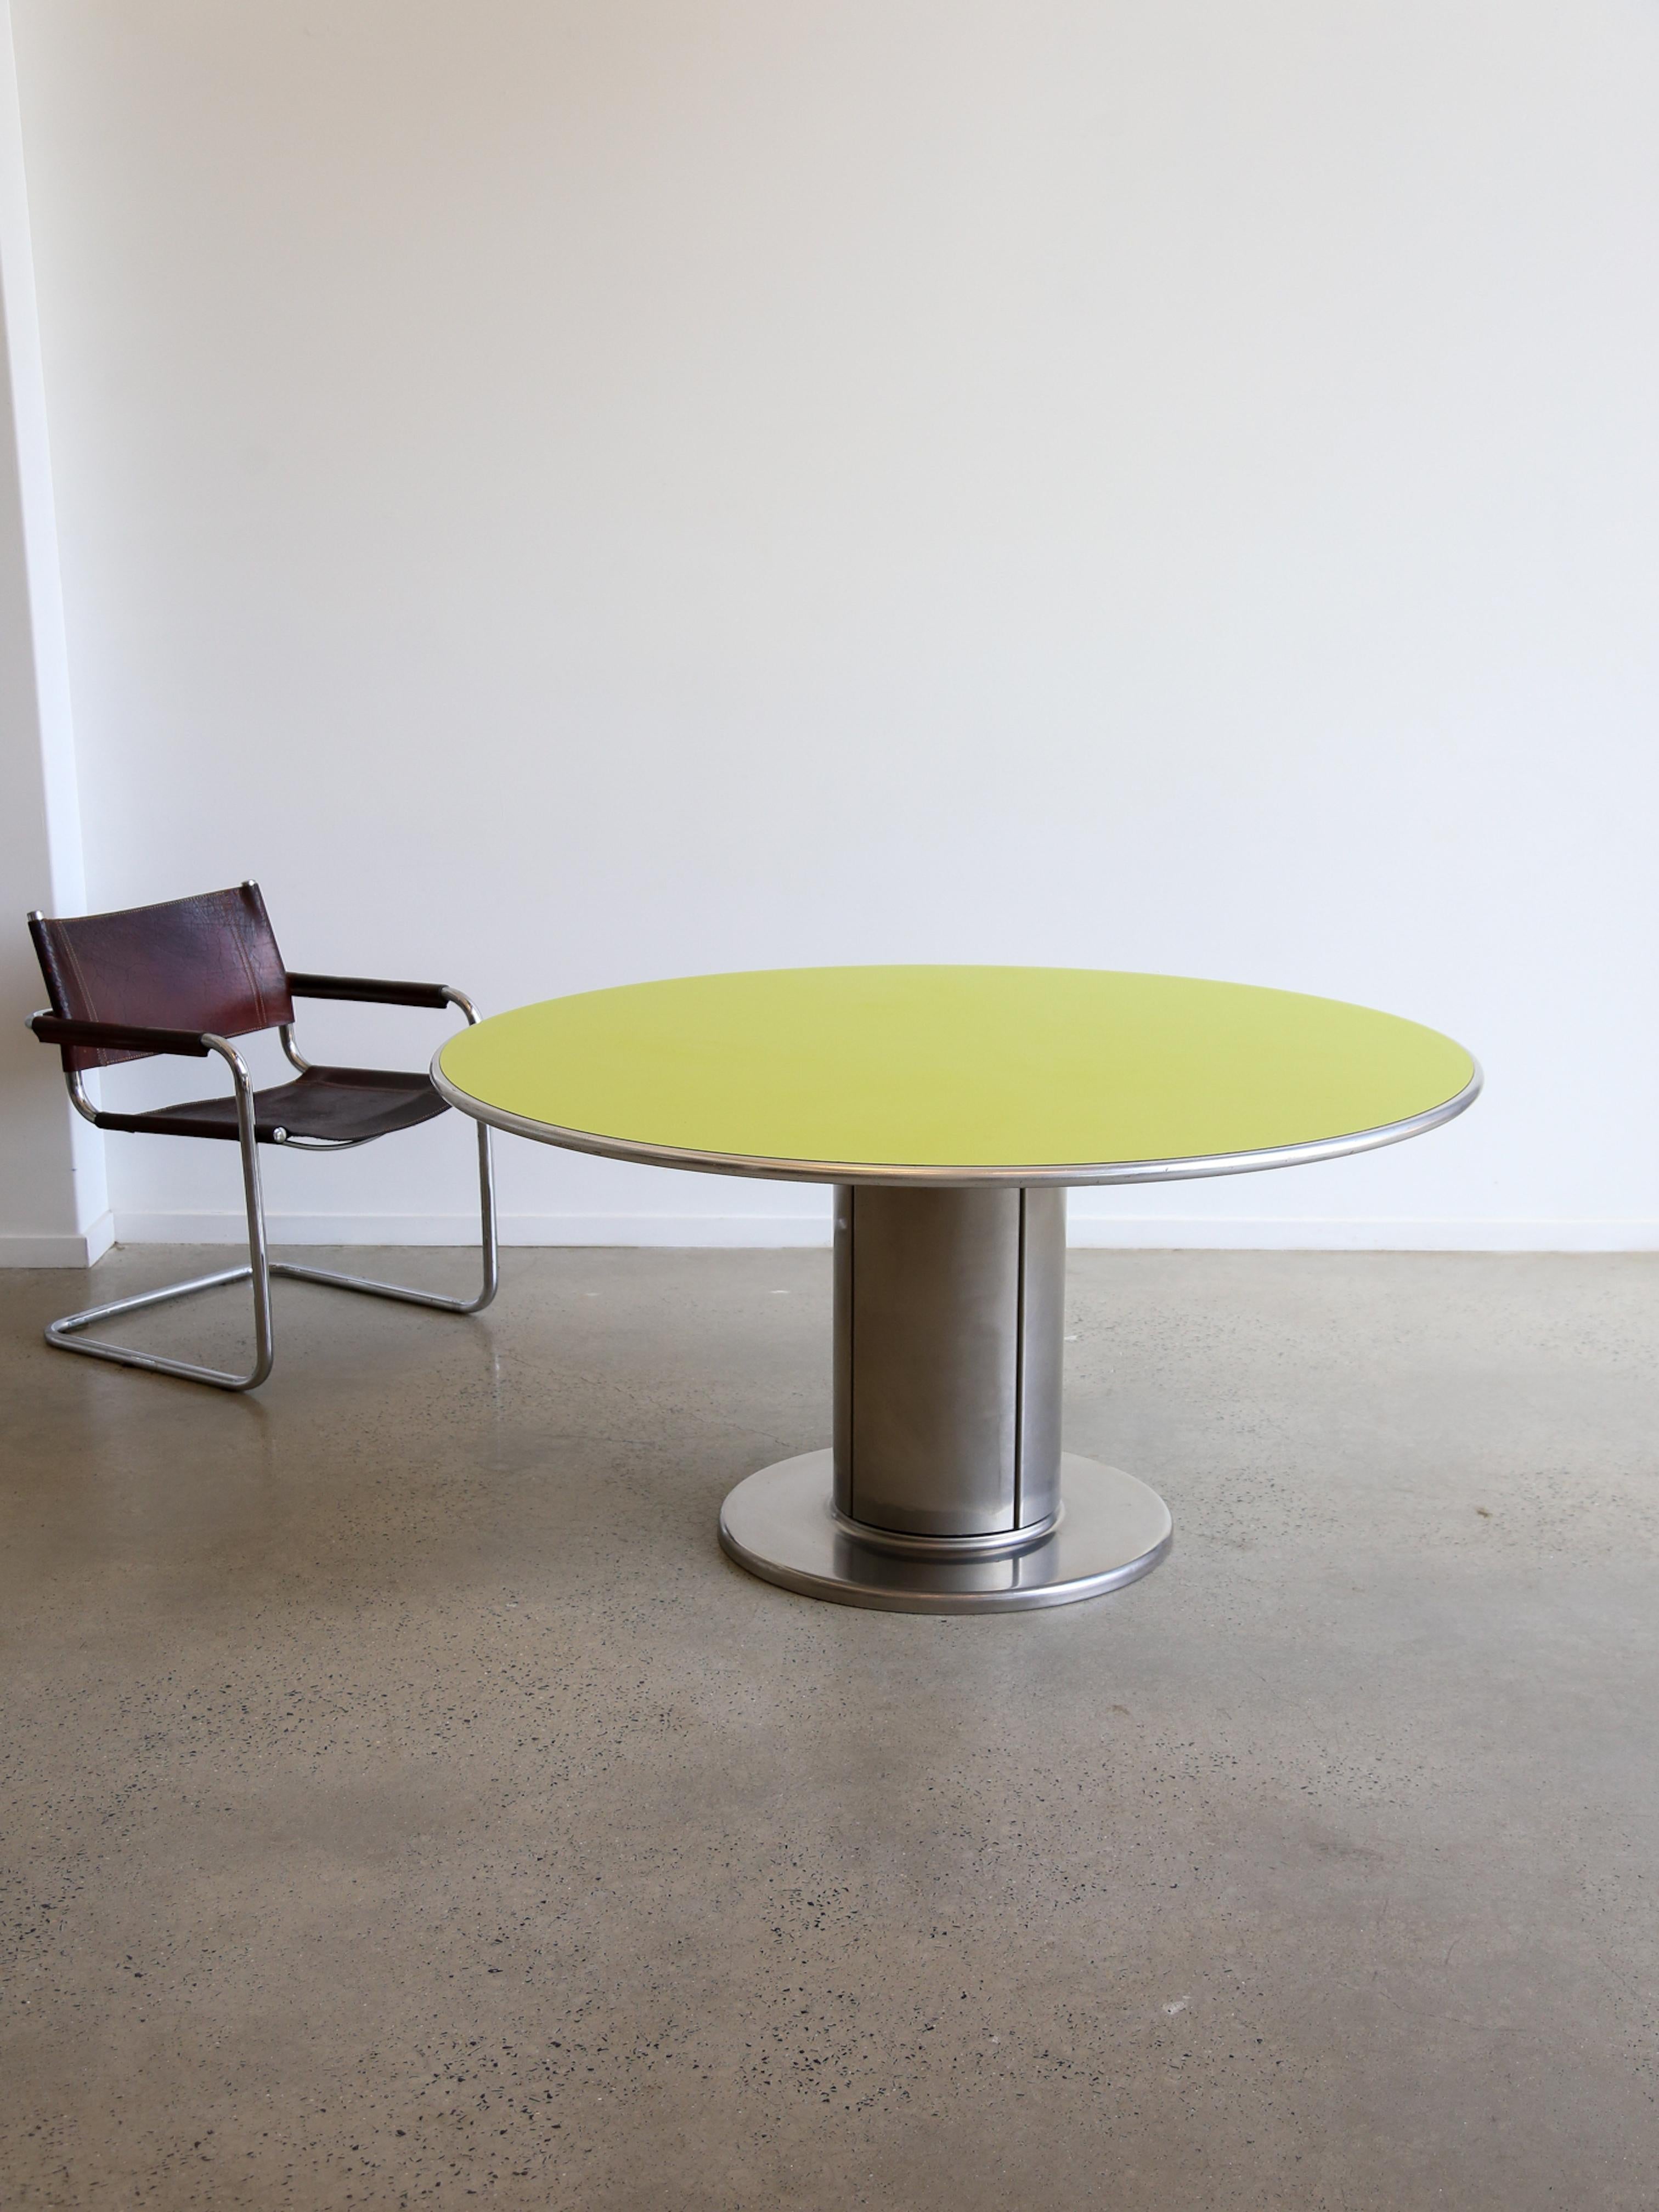 Aluminum “Cidonio” Dining Table by Antonia Astori for Cidue, Italy 1960